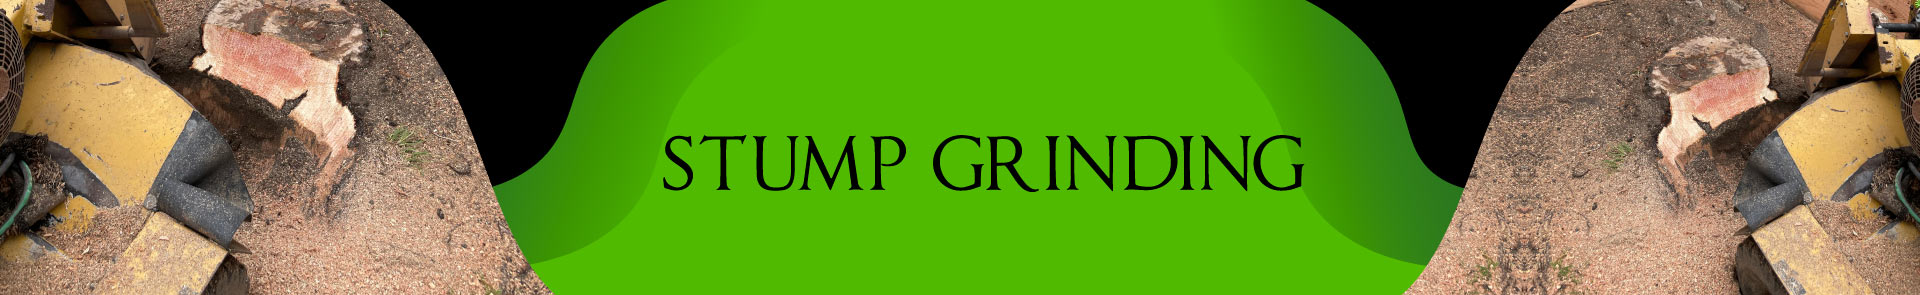 Stump Grinding Service